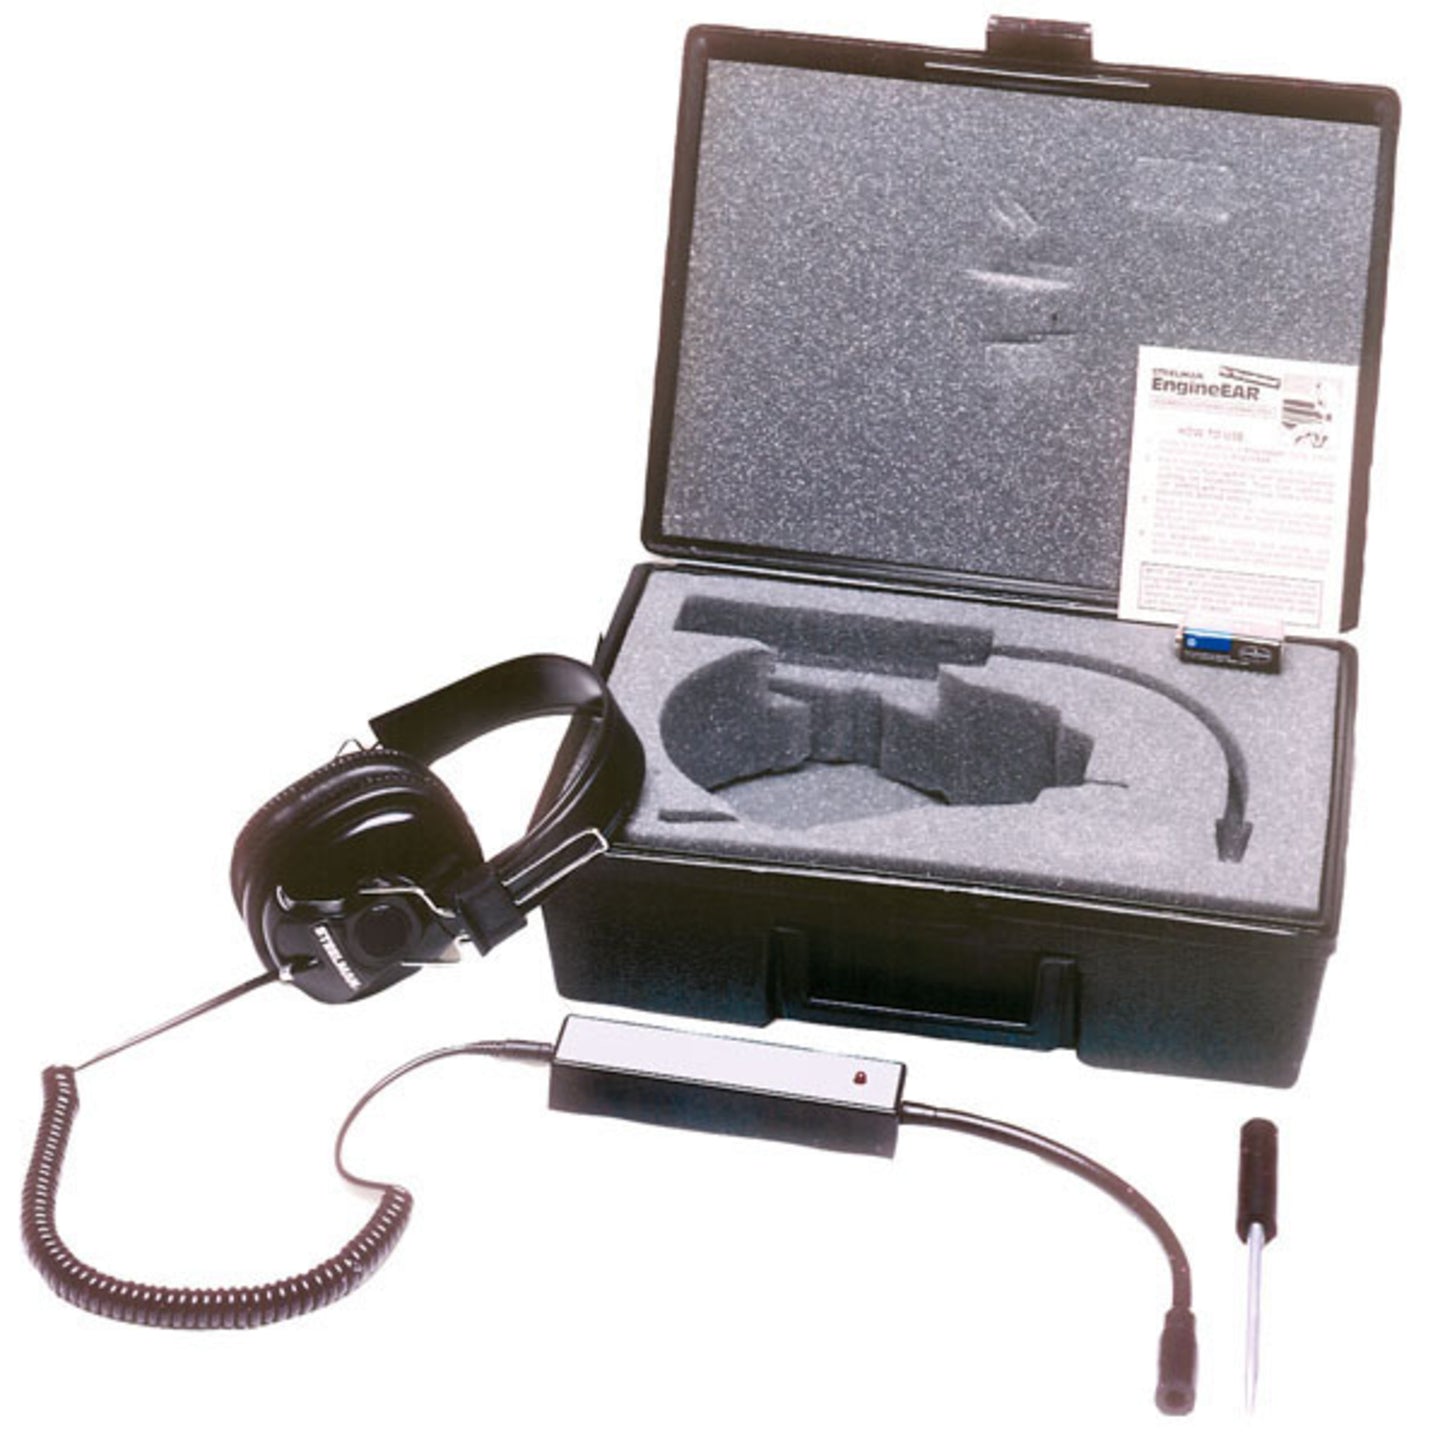 EngineEAR II Electronic Automotive Diagnostic Stethoscope